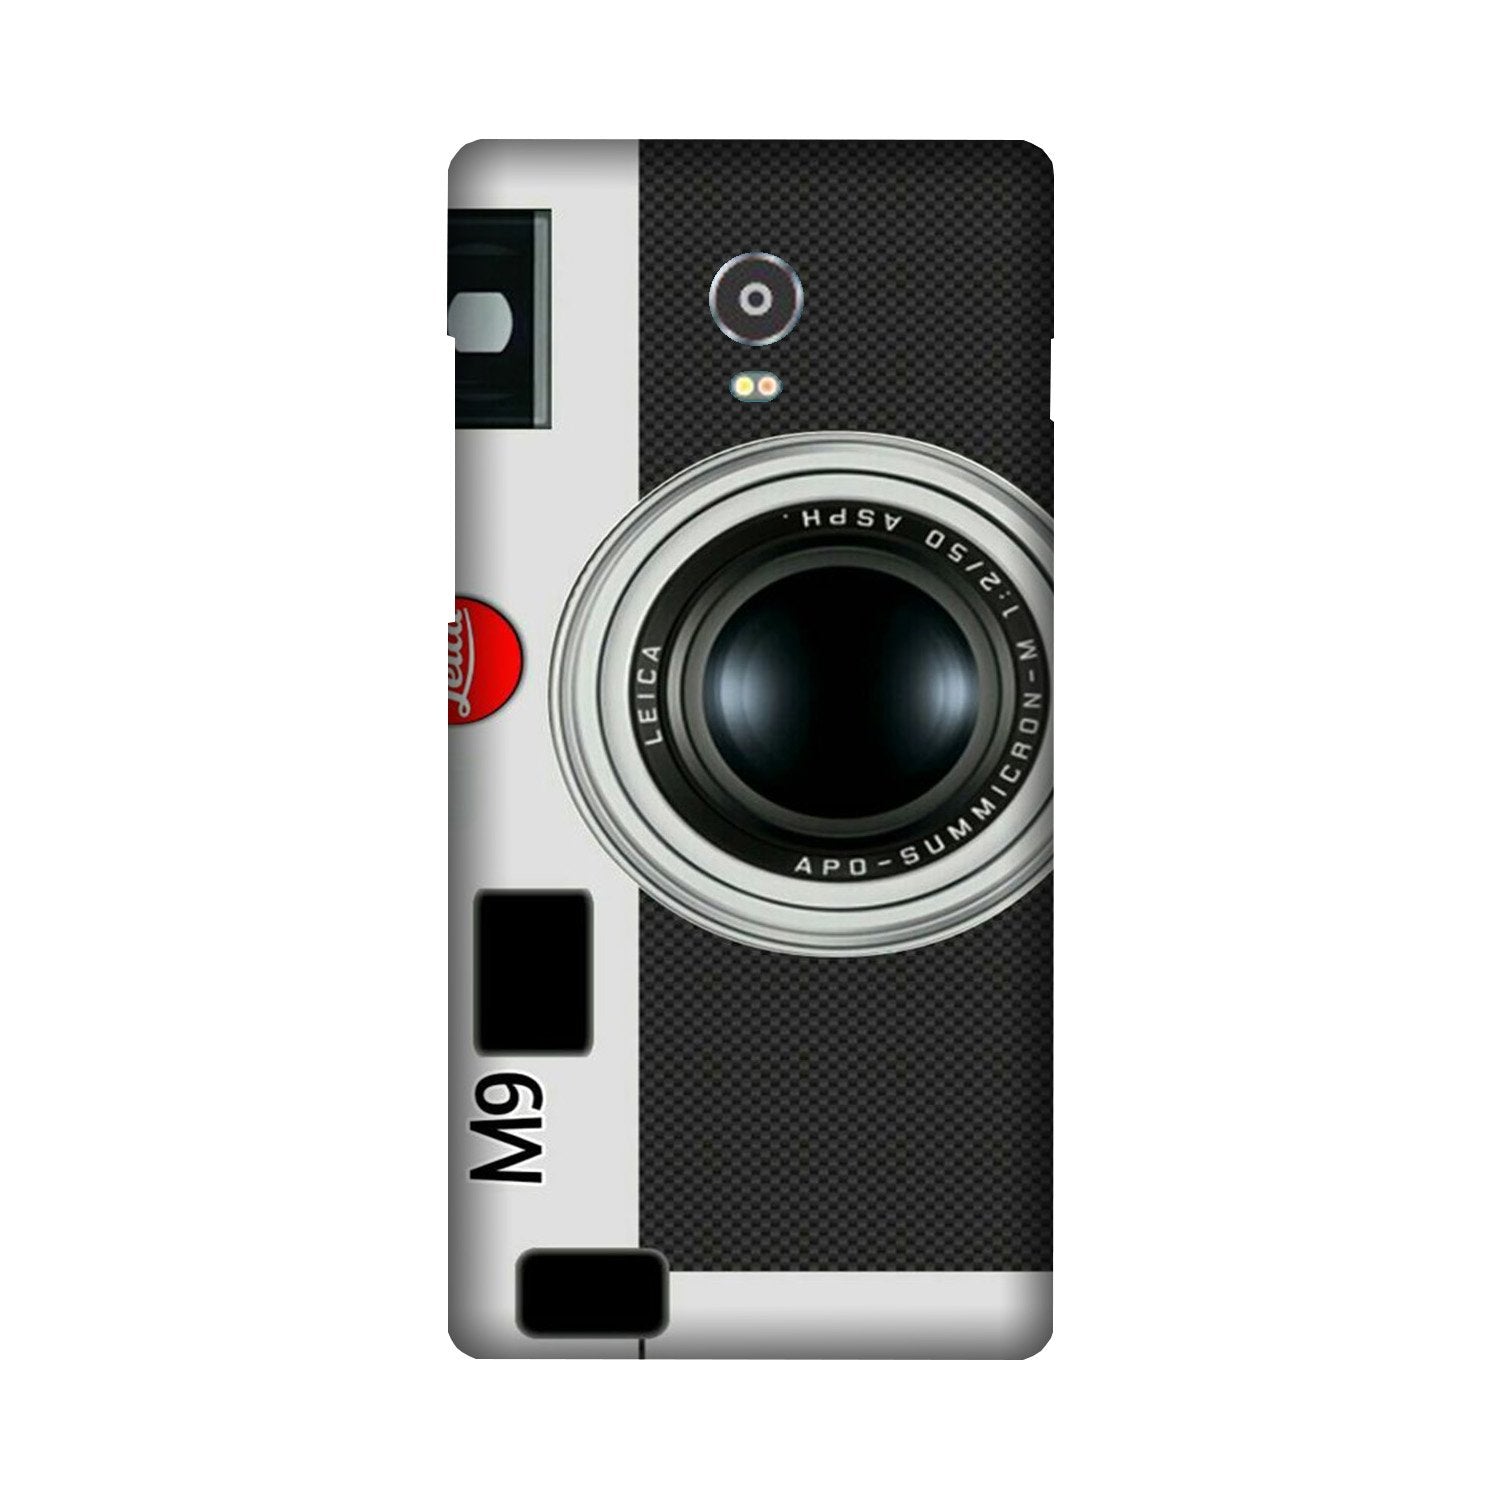 Camera Case for Lenovo Vibe P1 (Design No. 257)